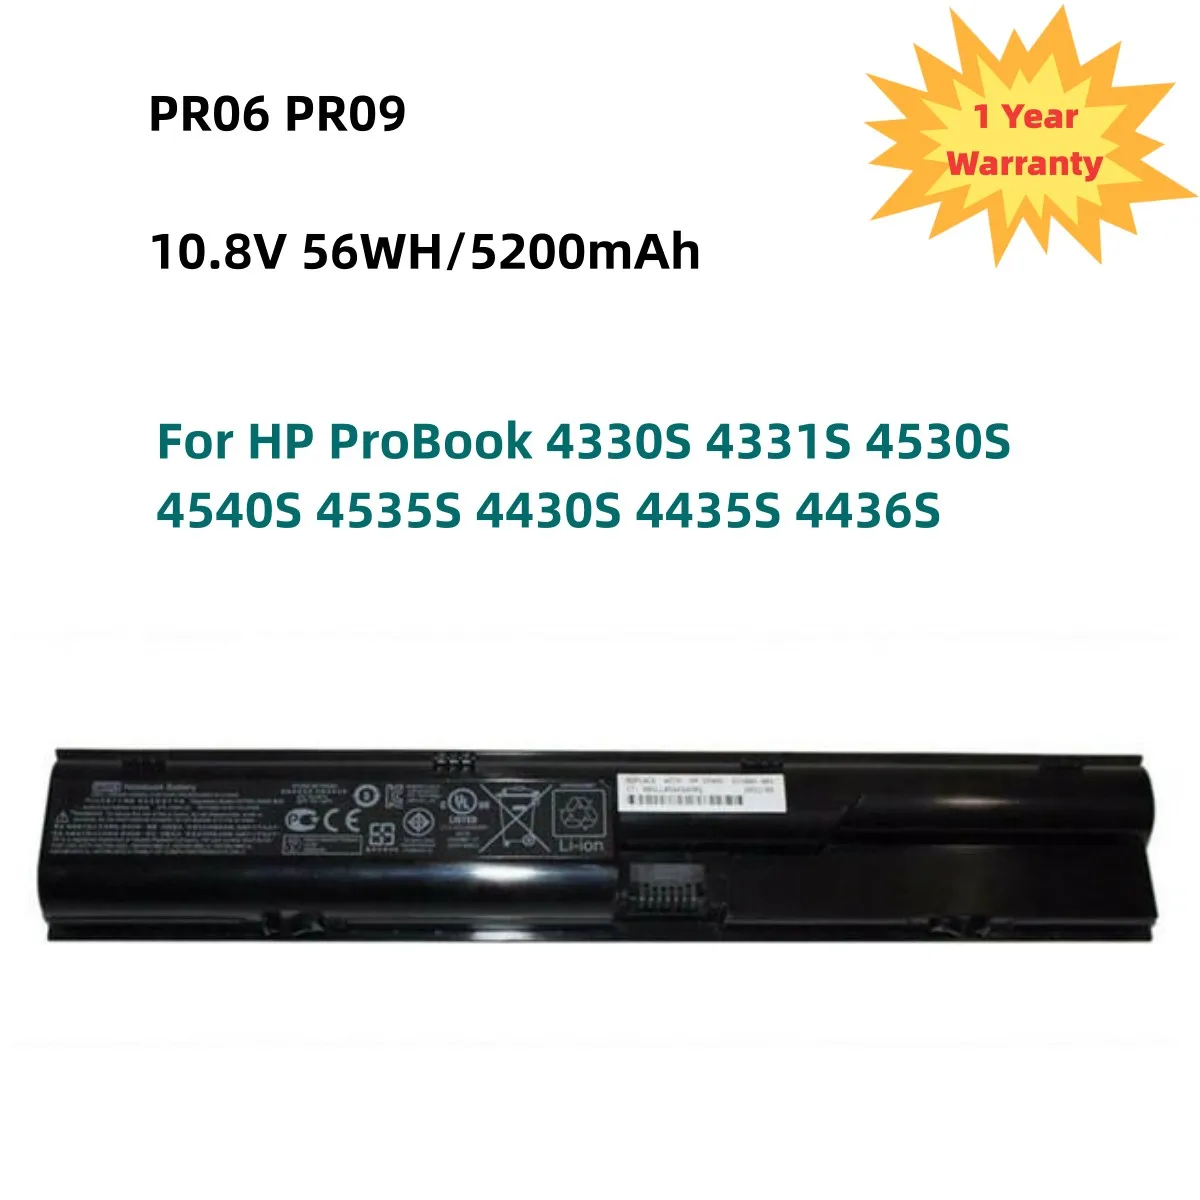 

PR06 Laptop Battery For HP ProBook 4330S 4331S 4530S 4540S 4535S 4430S 4435S 4436S HSTNN-OB2T HSTNN-LB2R /DB2R PR09 10.8V 56WH